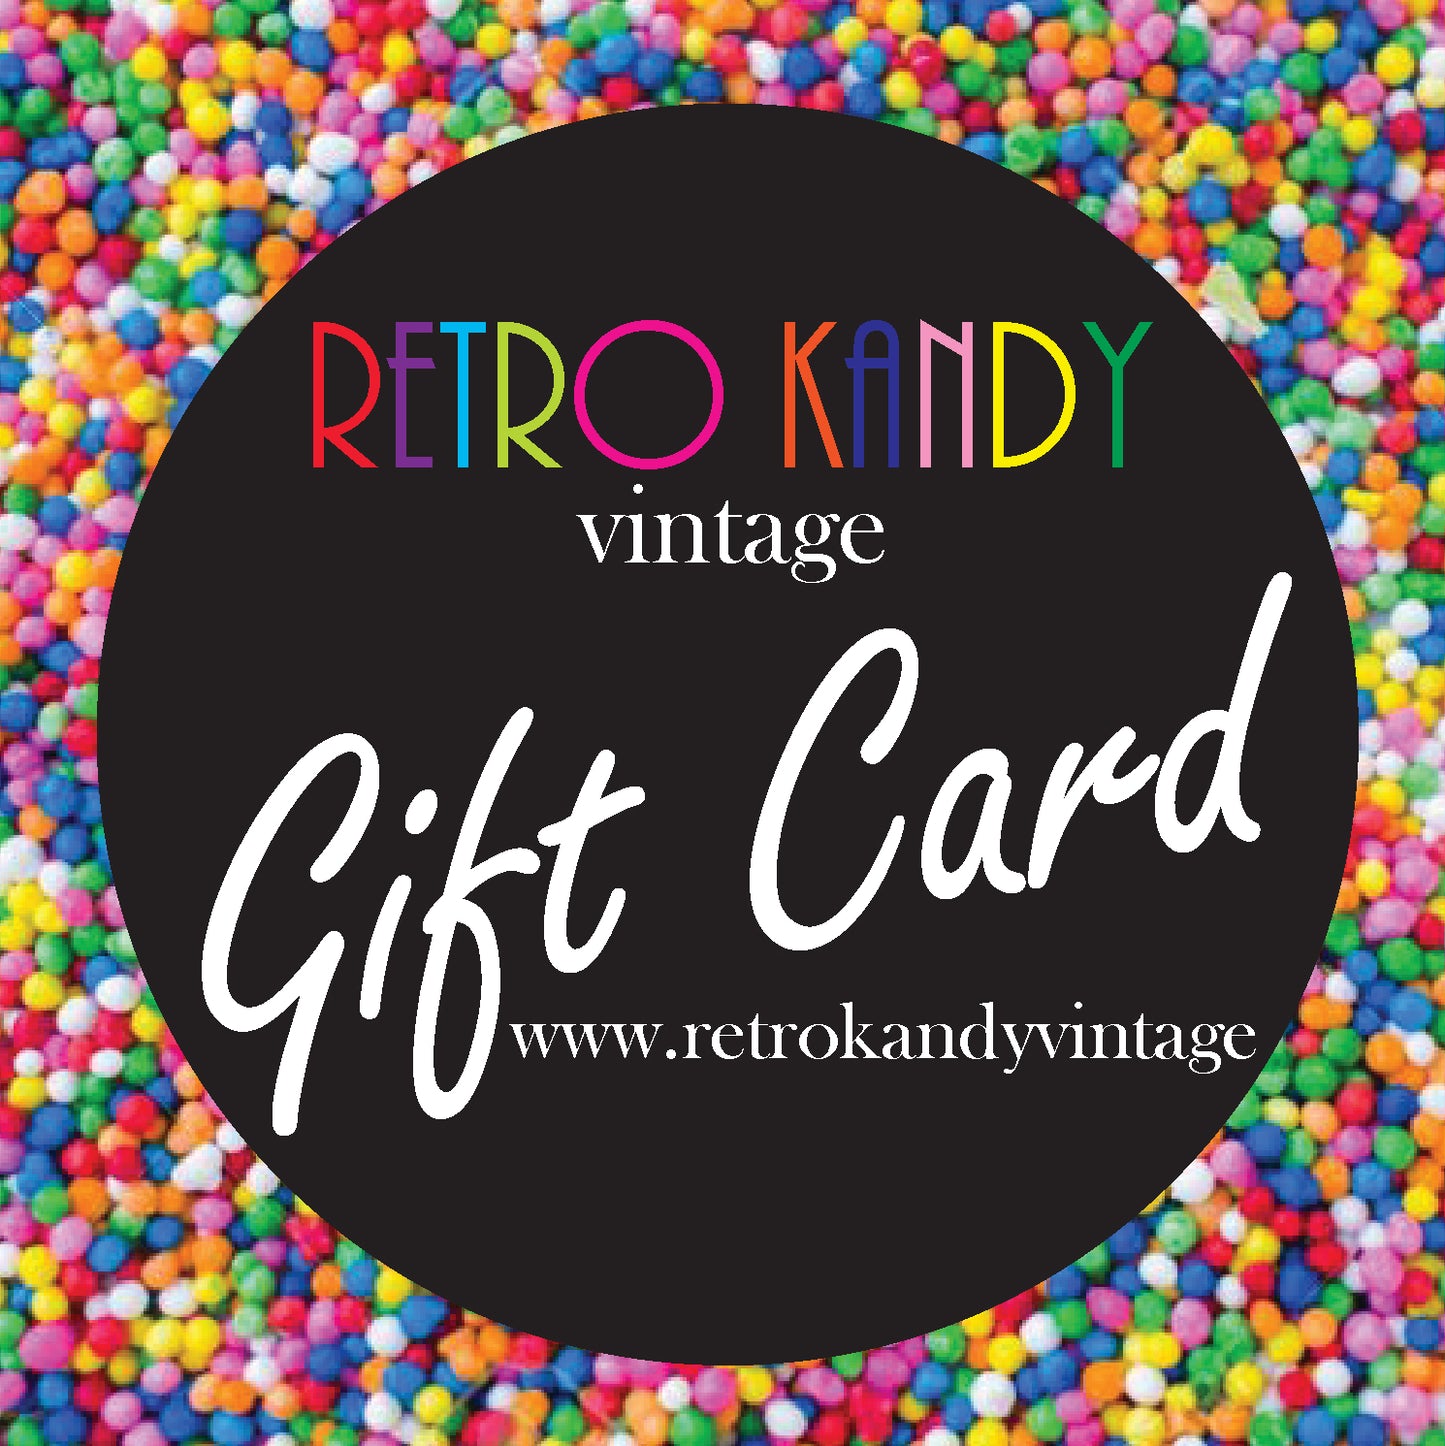 Retro Kandy Vintage Gift Cards